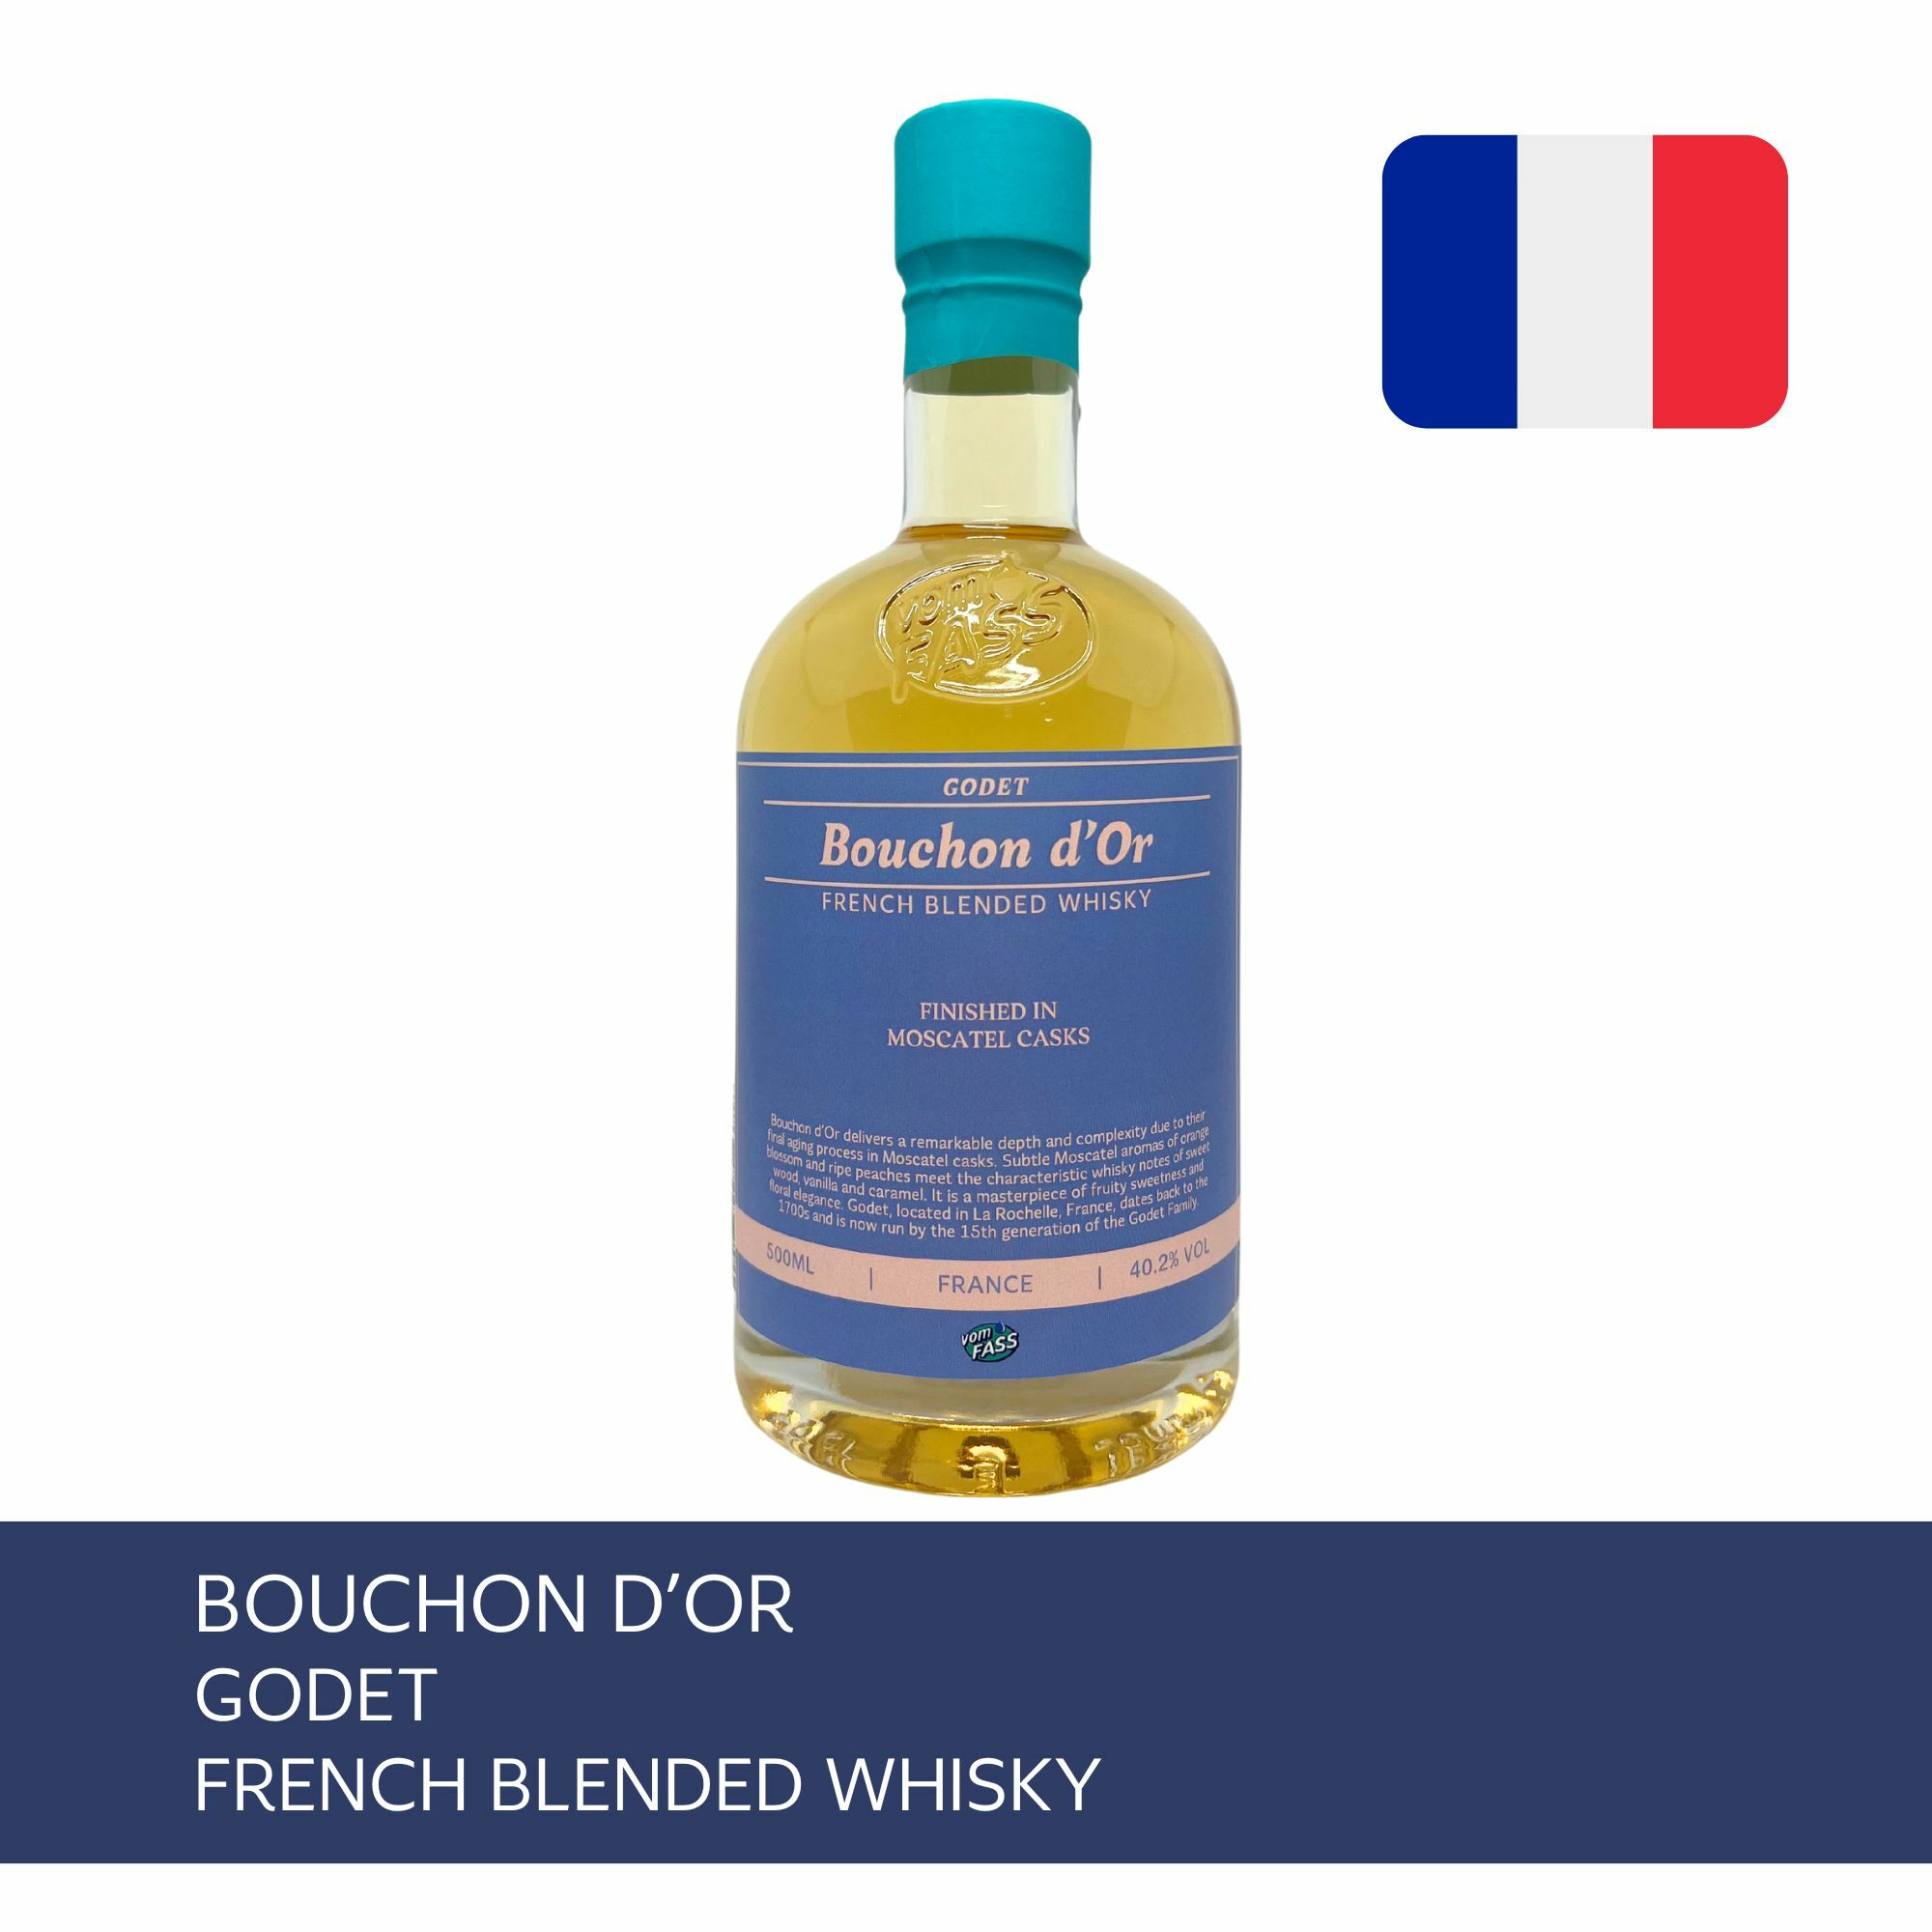 Bouchon d'Or, Godet, French Blended Whisky